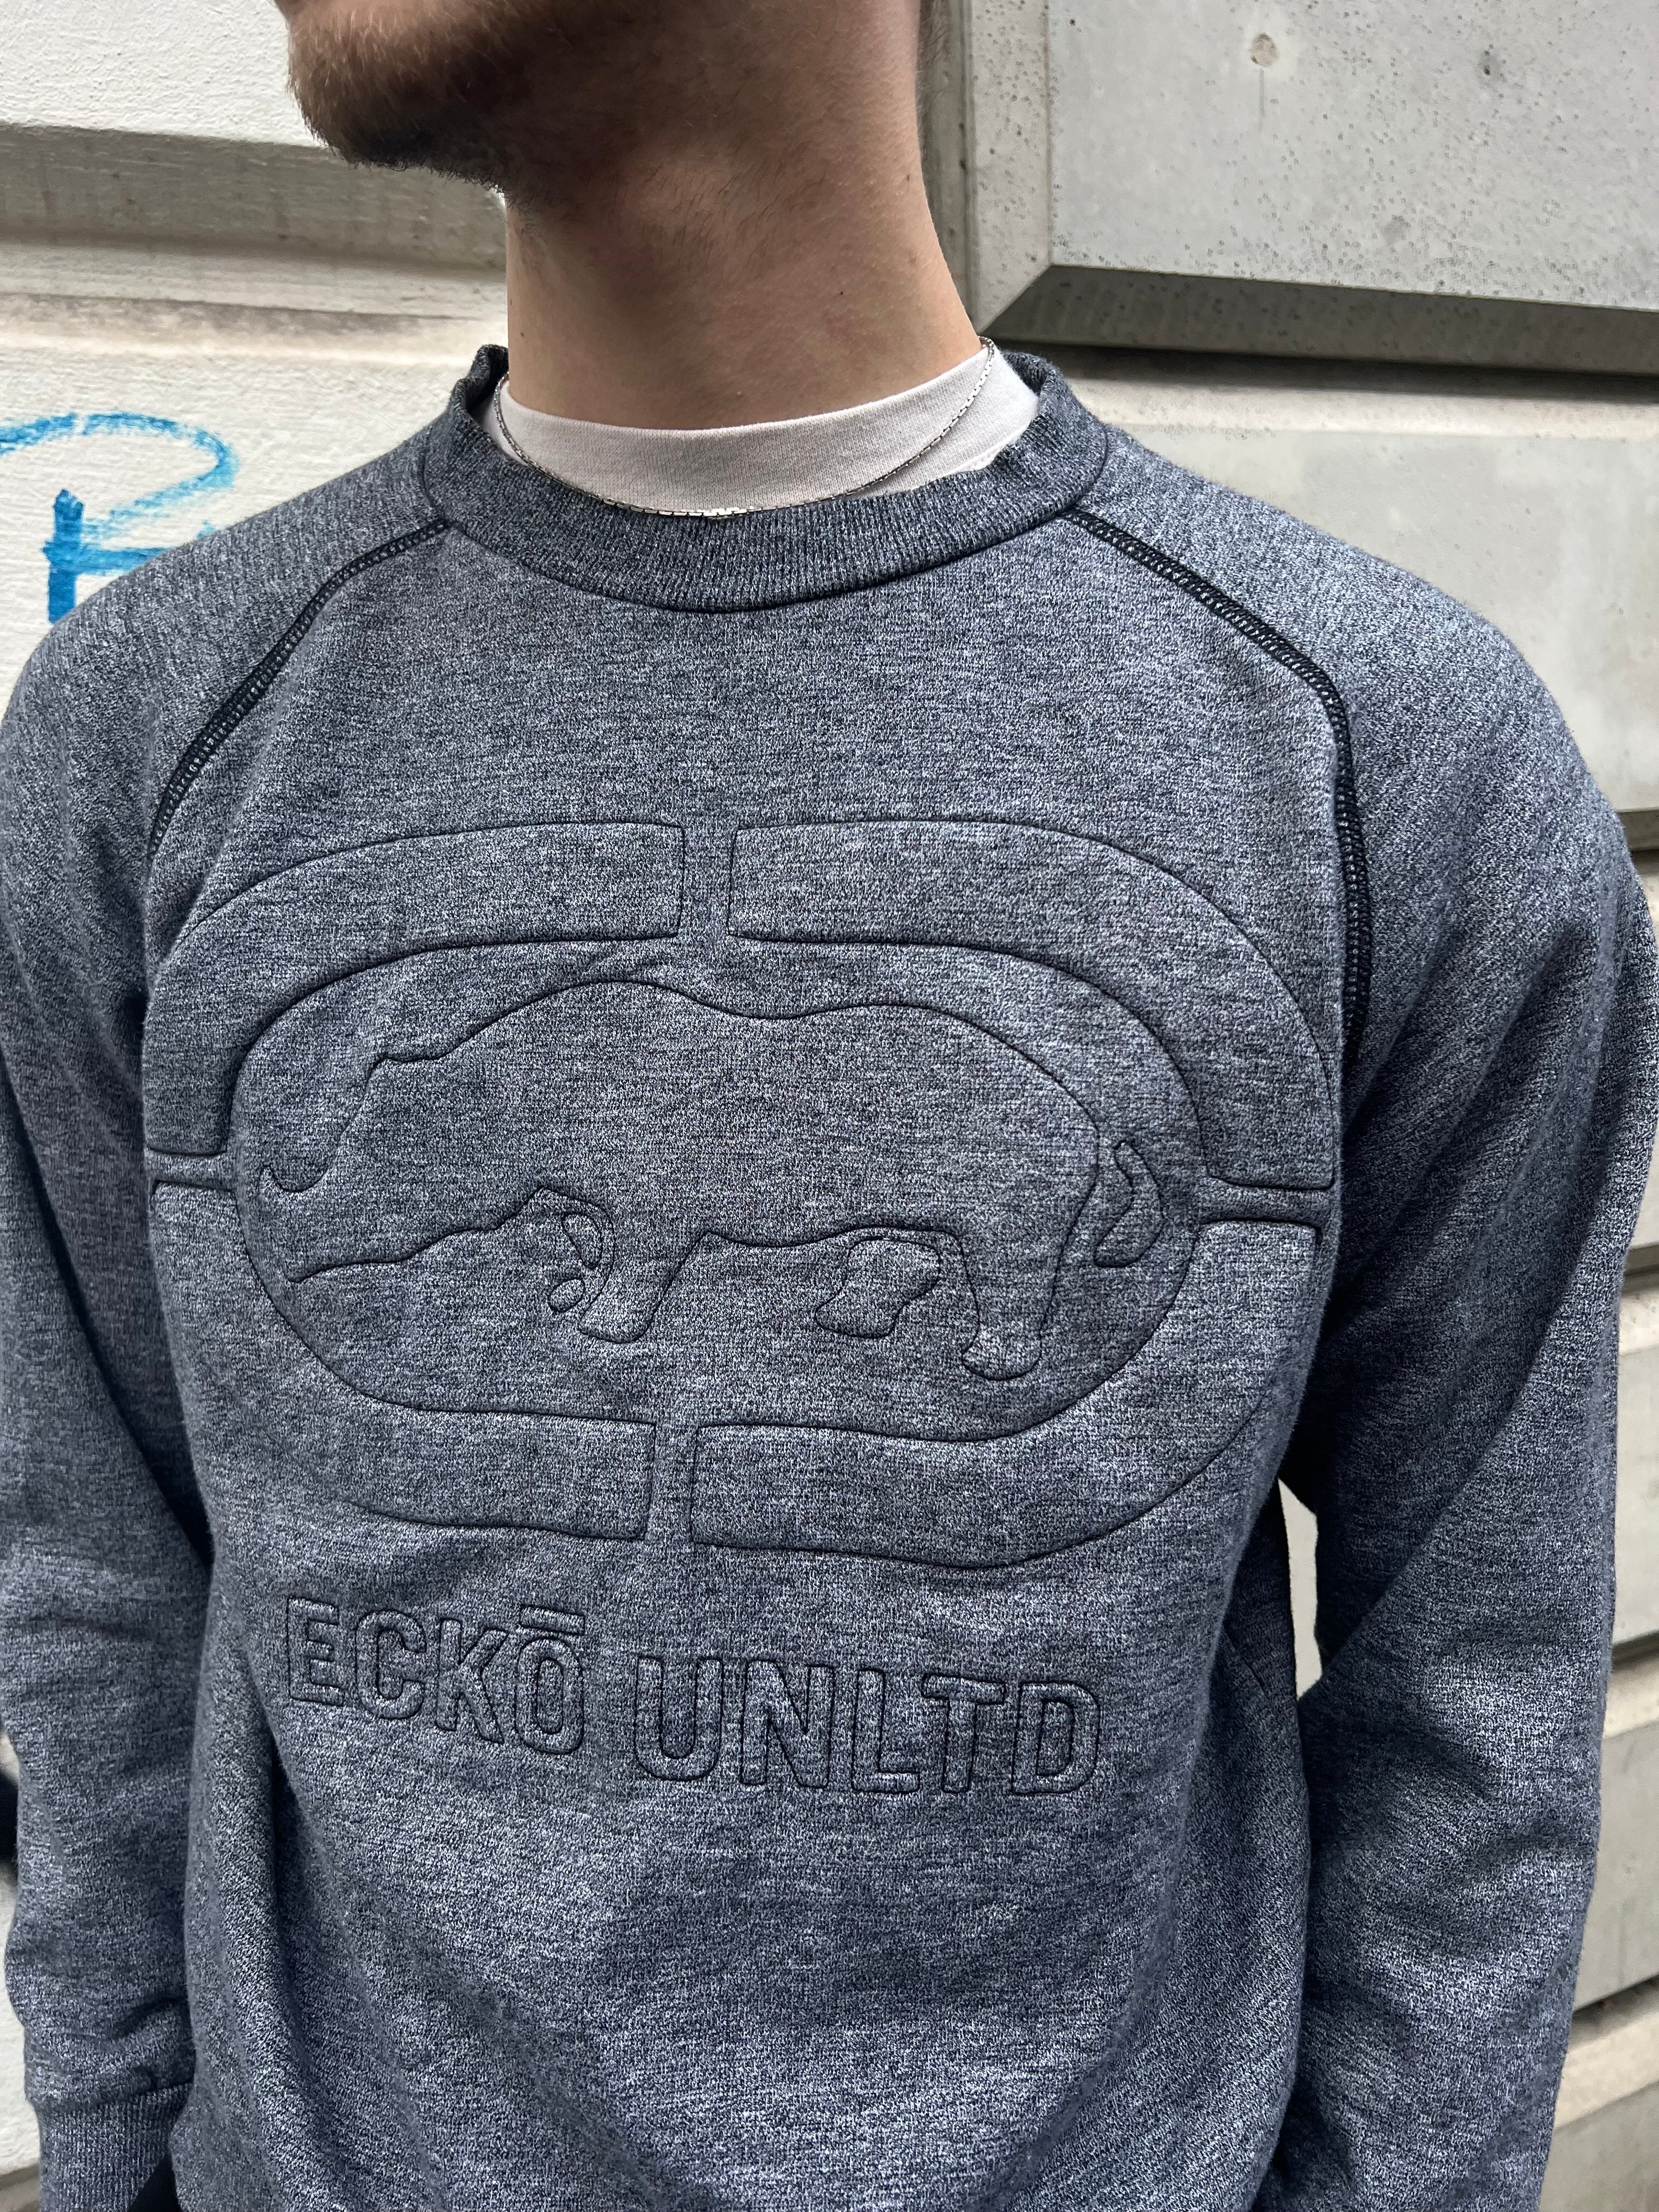 Vintage 90s Ecko Unltd Logo Sweater (M)